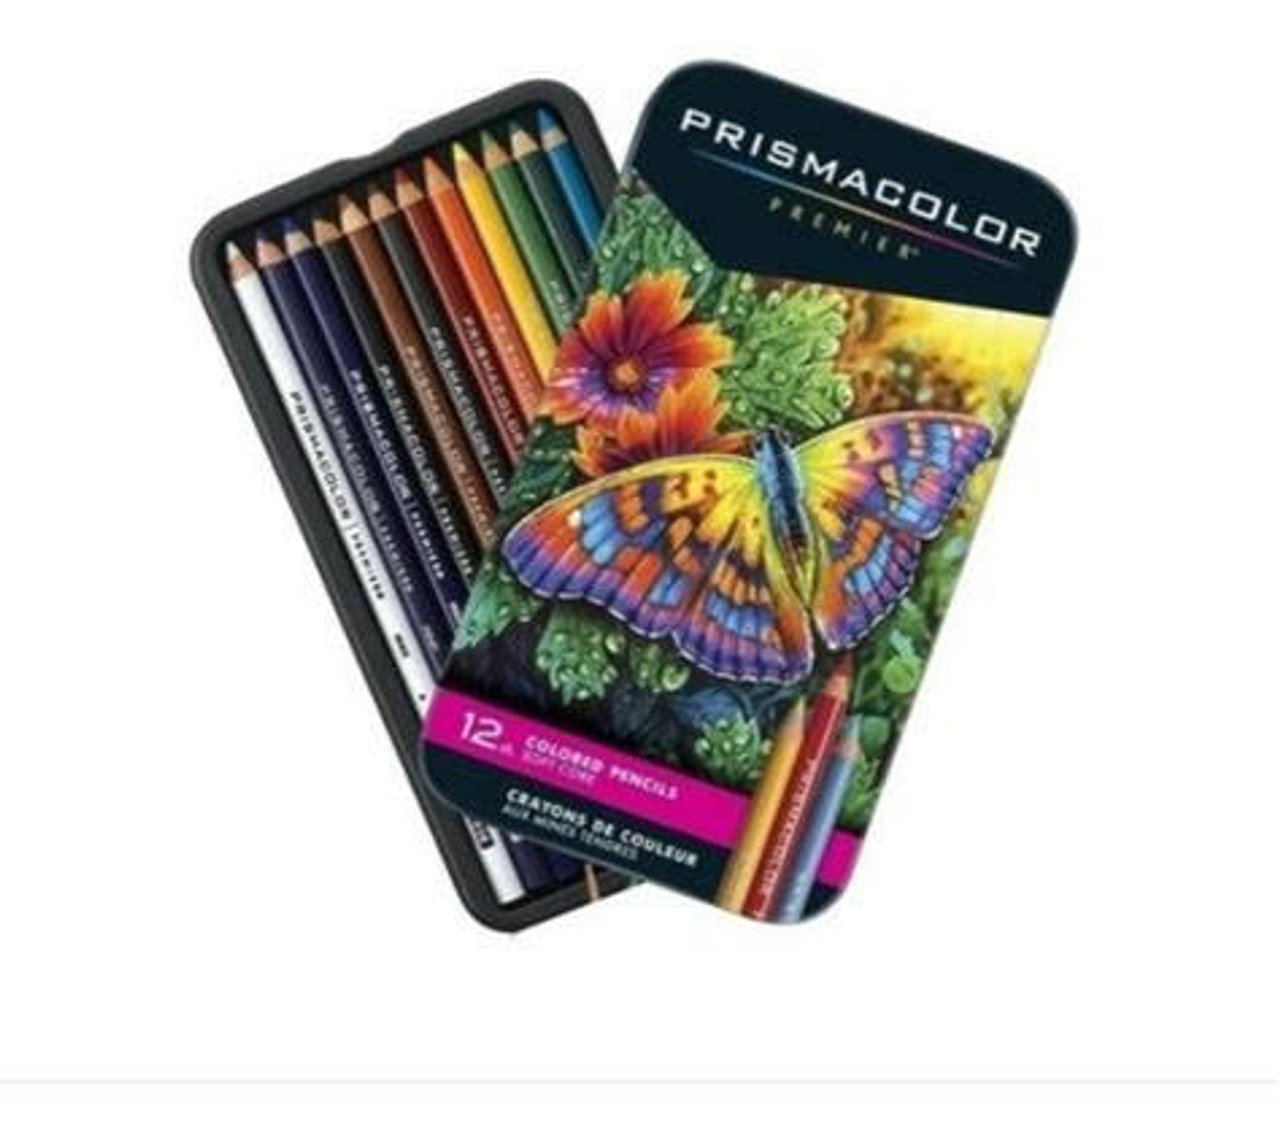 https://cdn11.bigcommerce.com/s-9uf88xhege/images/stencil/1280x1280/products/8665/79930/prismacolor-premier-thick-core-colored-pencil-set-12-color-set__42325.1690489645.jpg?c=1?imbypass=on